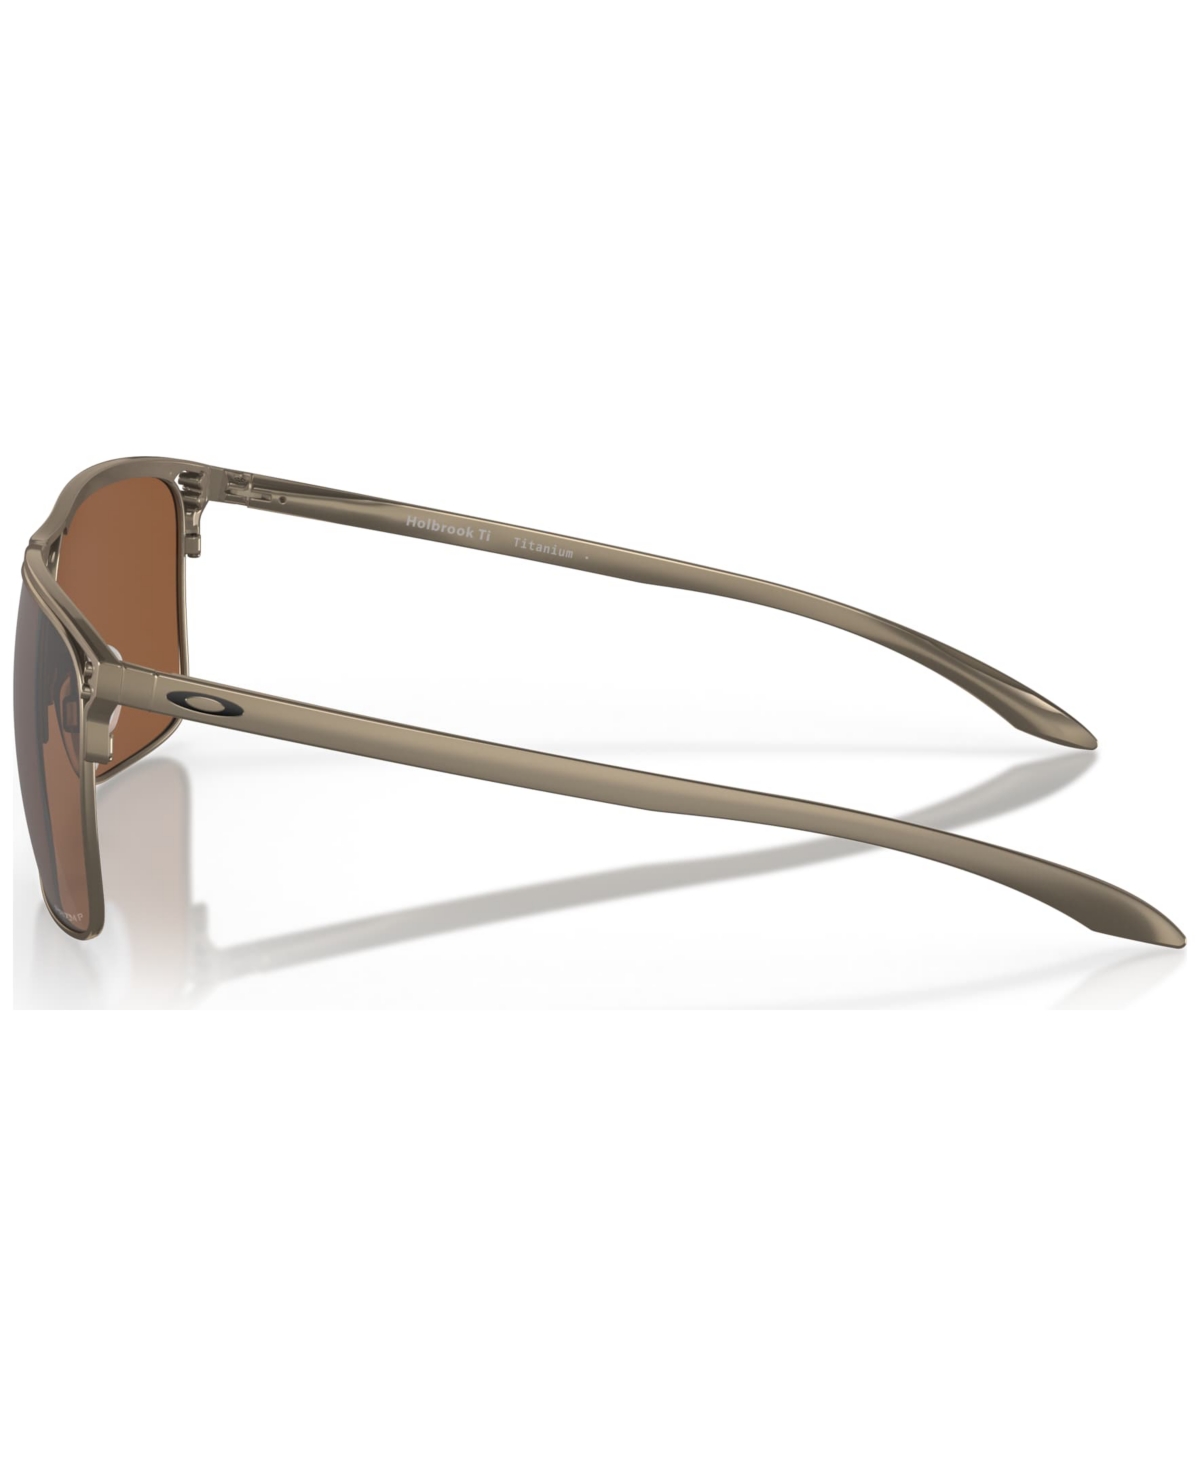 Shop Oakley Men's Polarized Sunglasses, Holbrook Ti In Satin Pewter